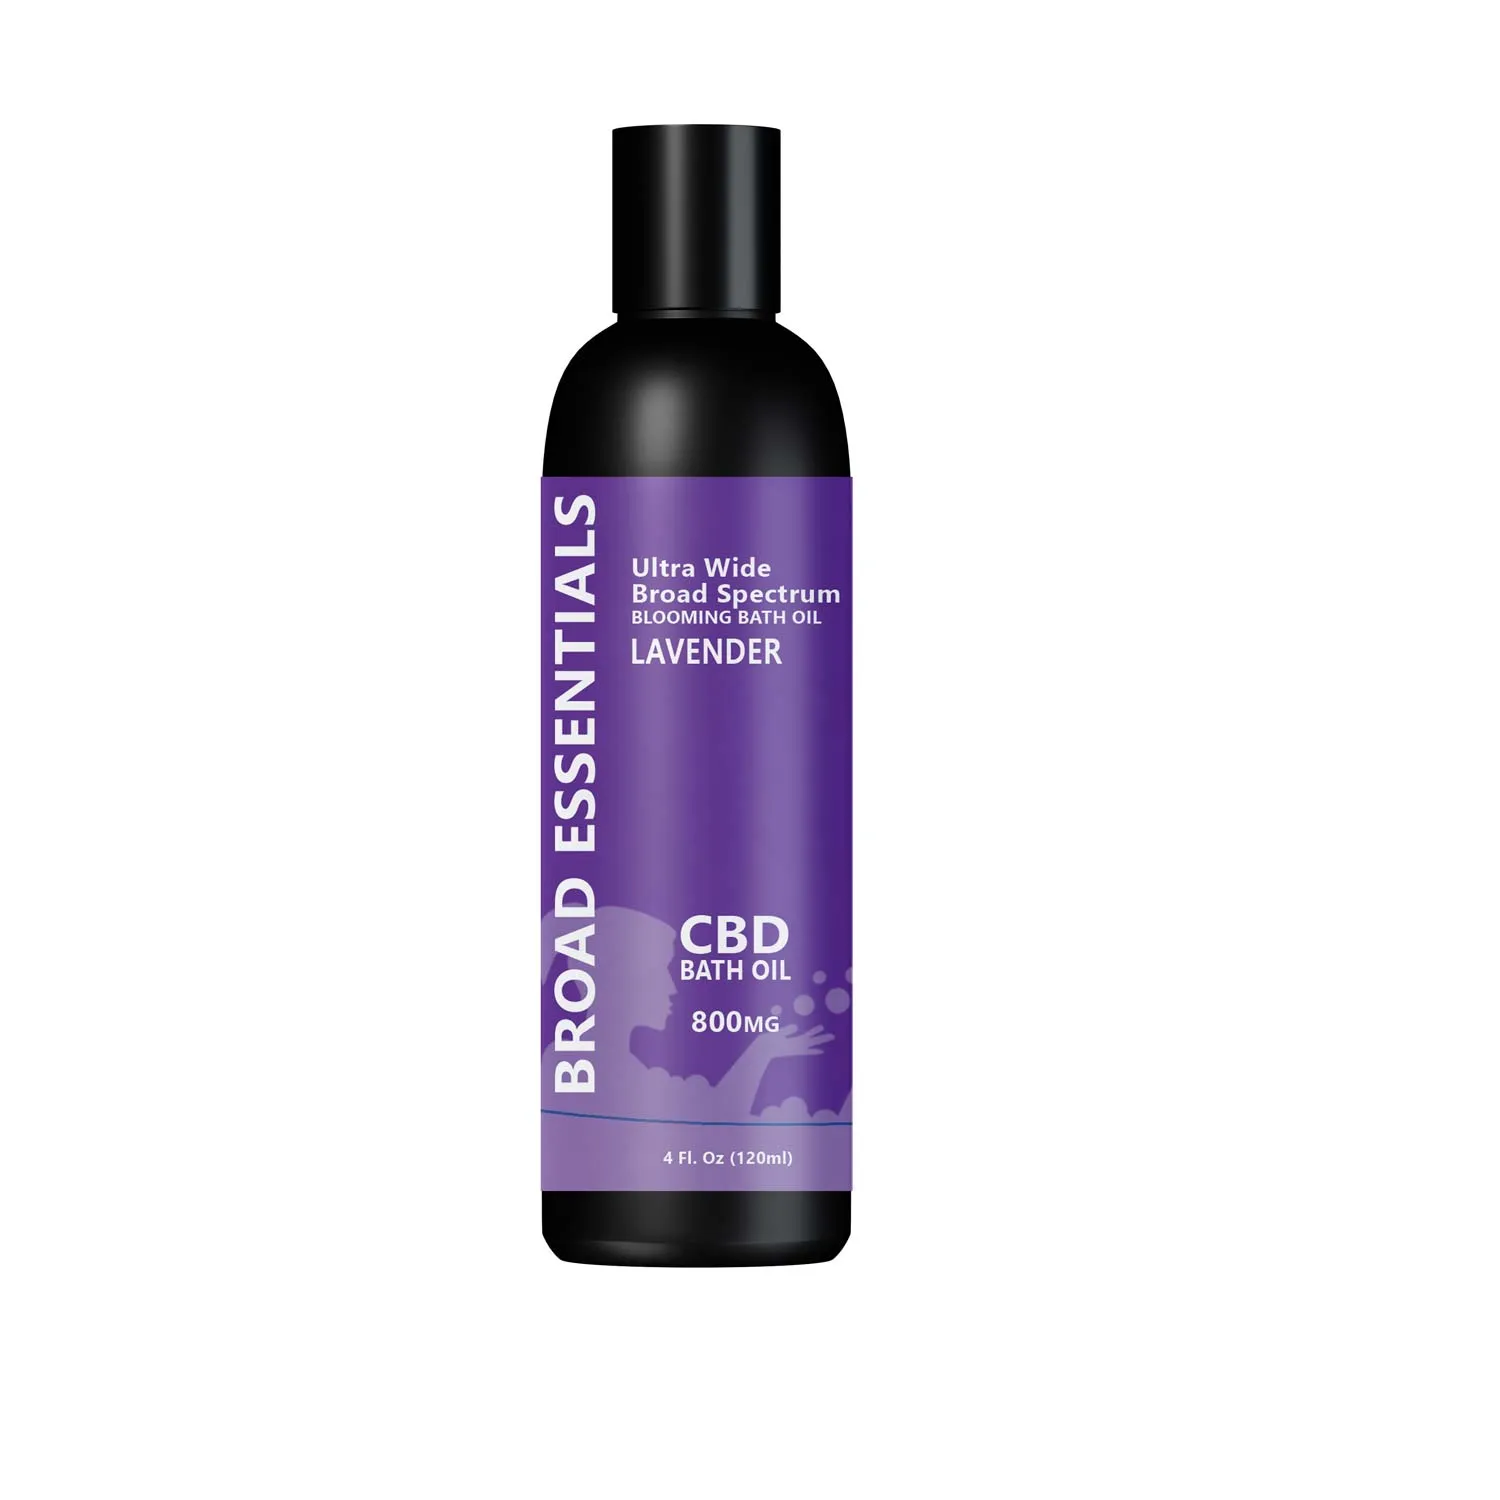 Lavender CBD Bath Oil with 800mg Broad Spectrum CBD by Broad Essentials | Lavender Blooming CBD Infused Bath Oil